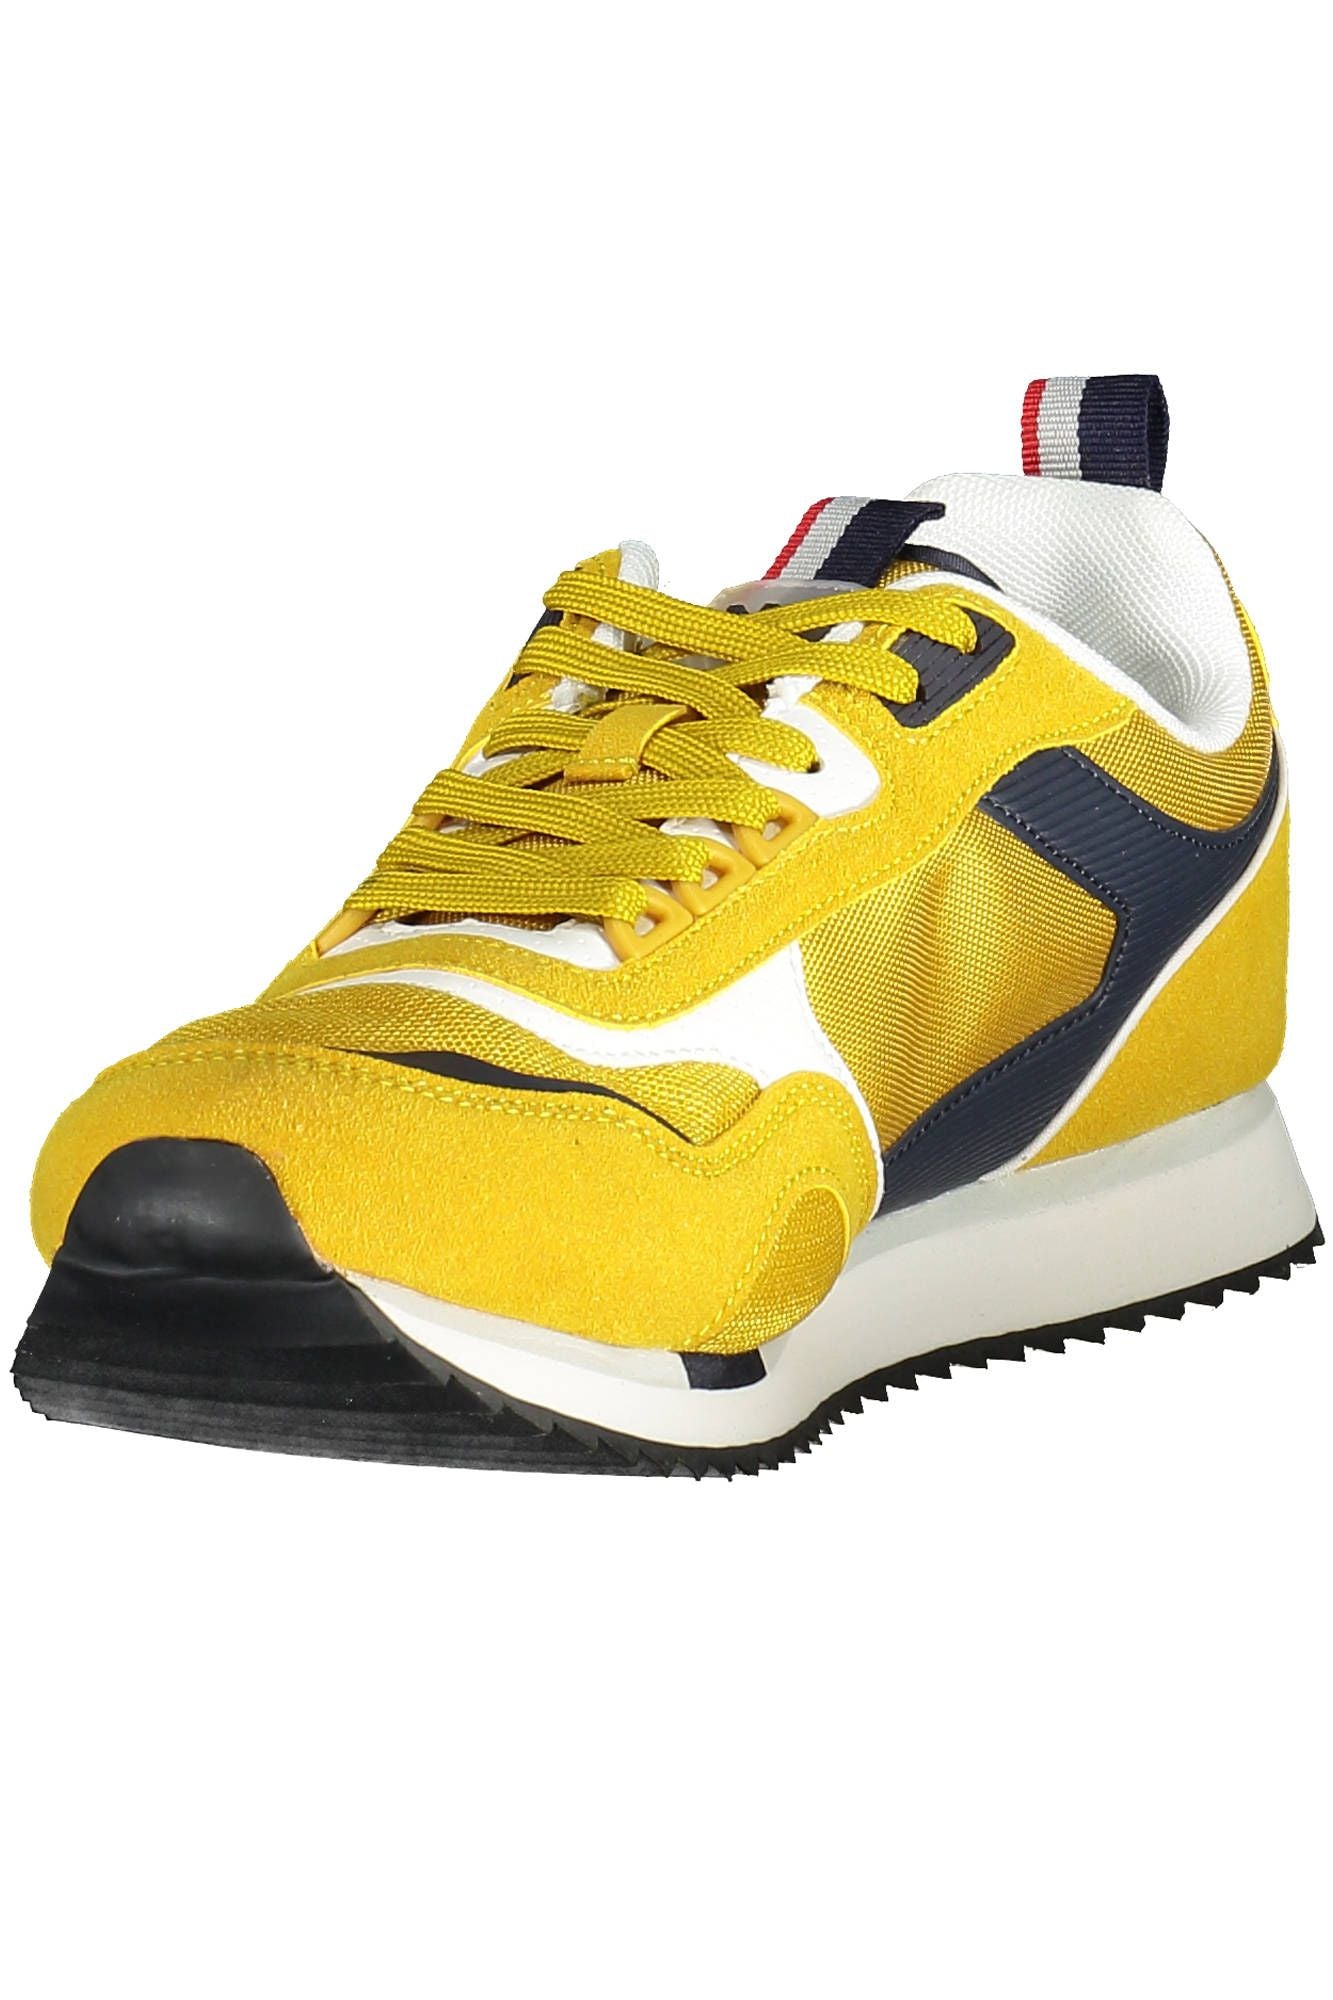 U.S. POLO ASSN. Dashing Yellow Lace-Up Sports Sneakers